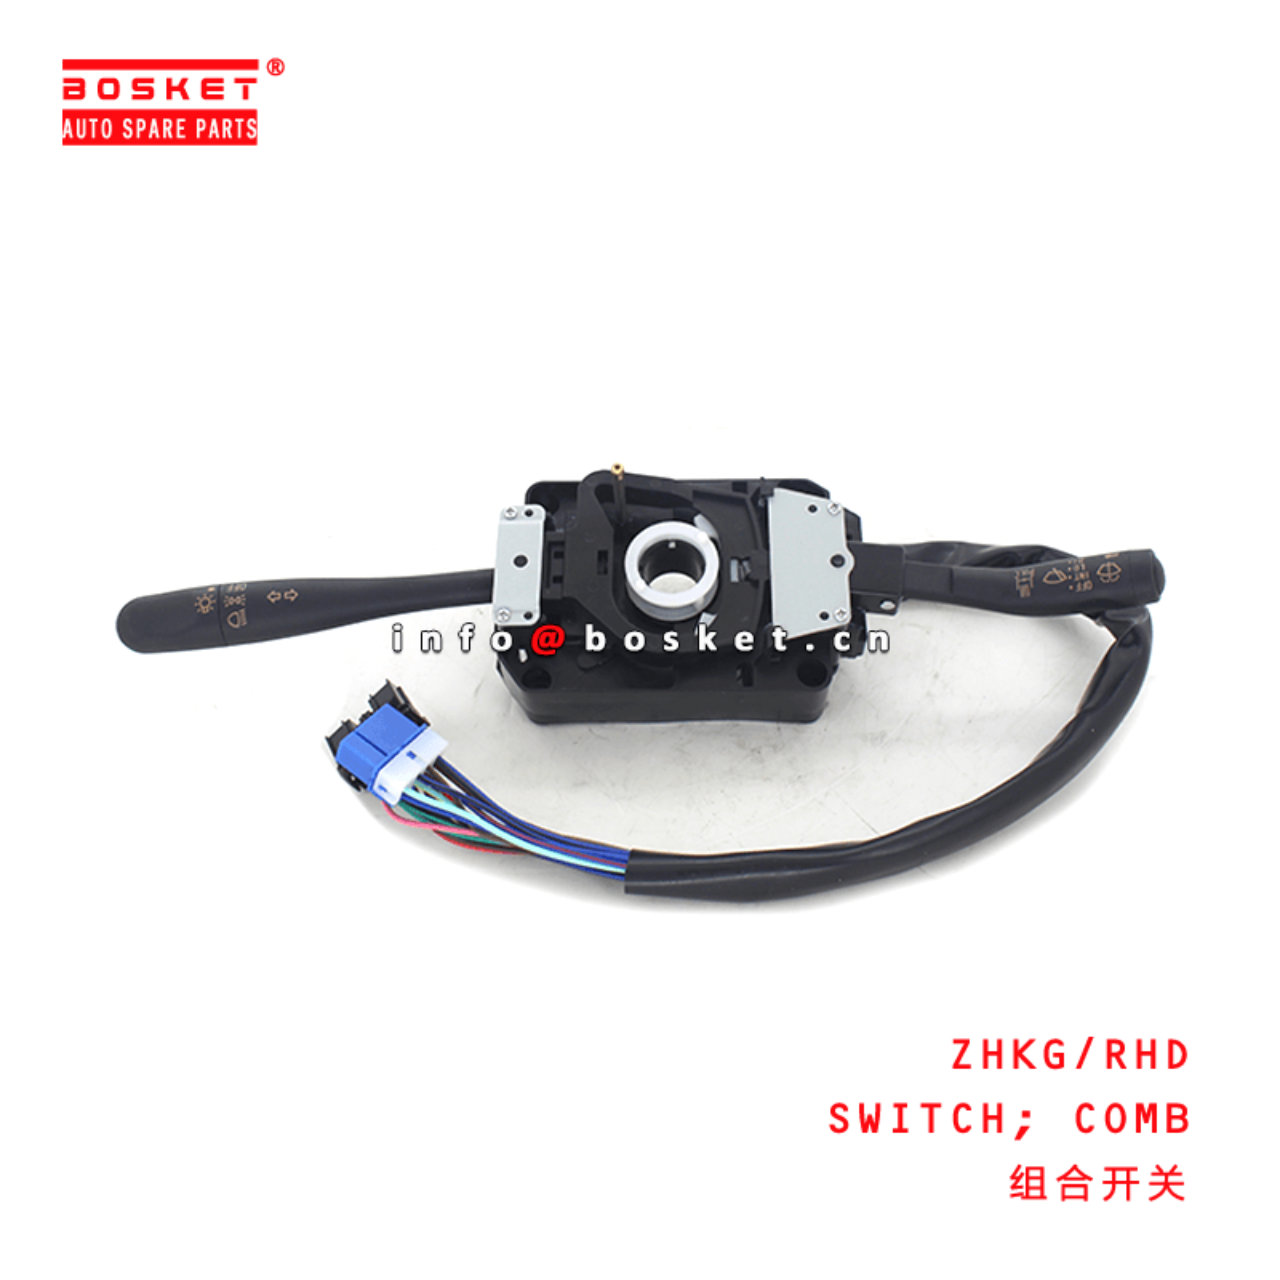  ZHKG/RHD Combination Switch Suitable for ISUZU 